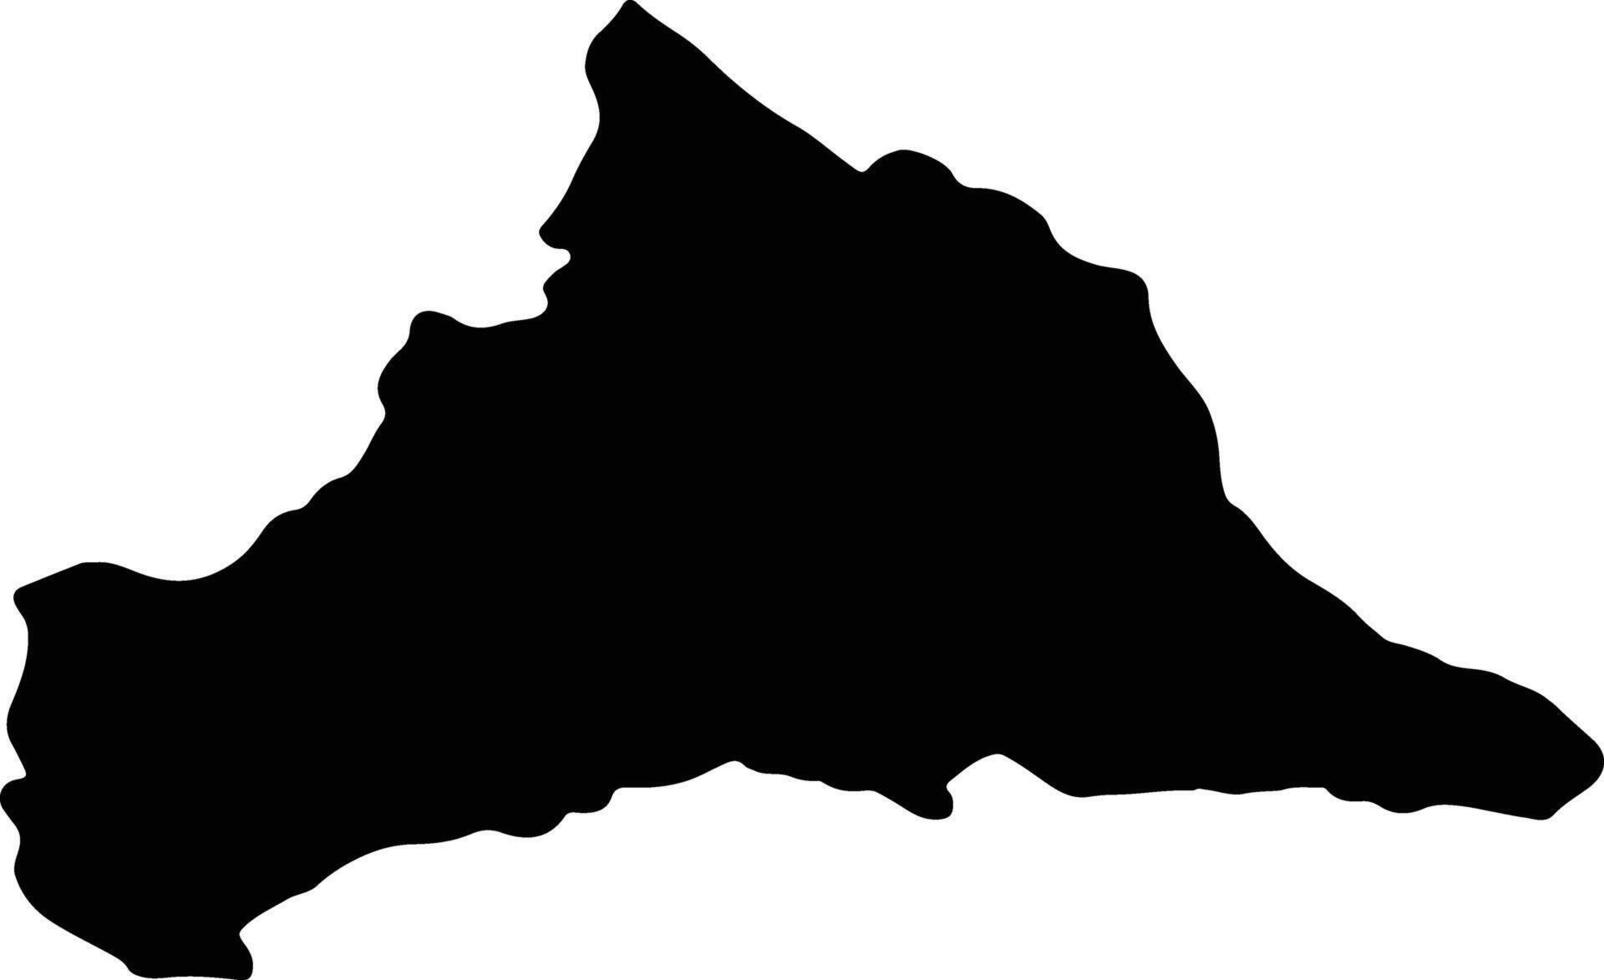 cerro largo Uruguay silueta mapa vector